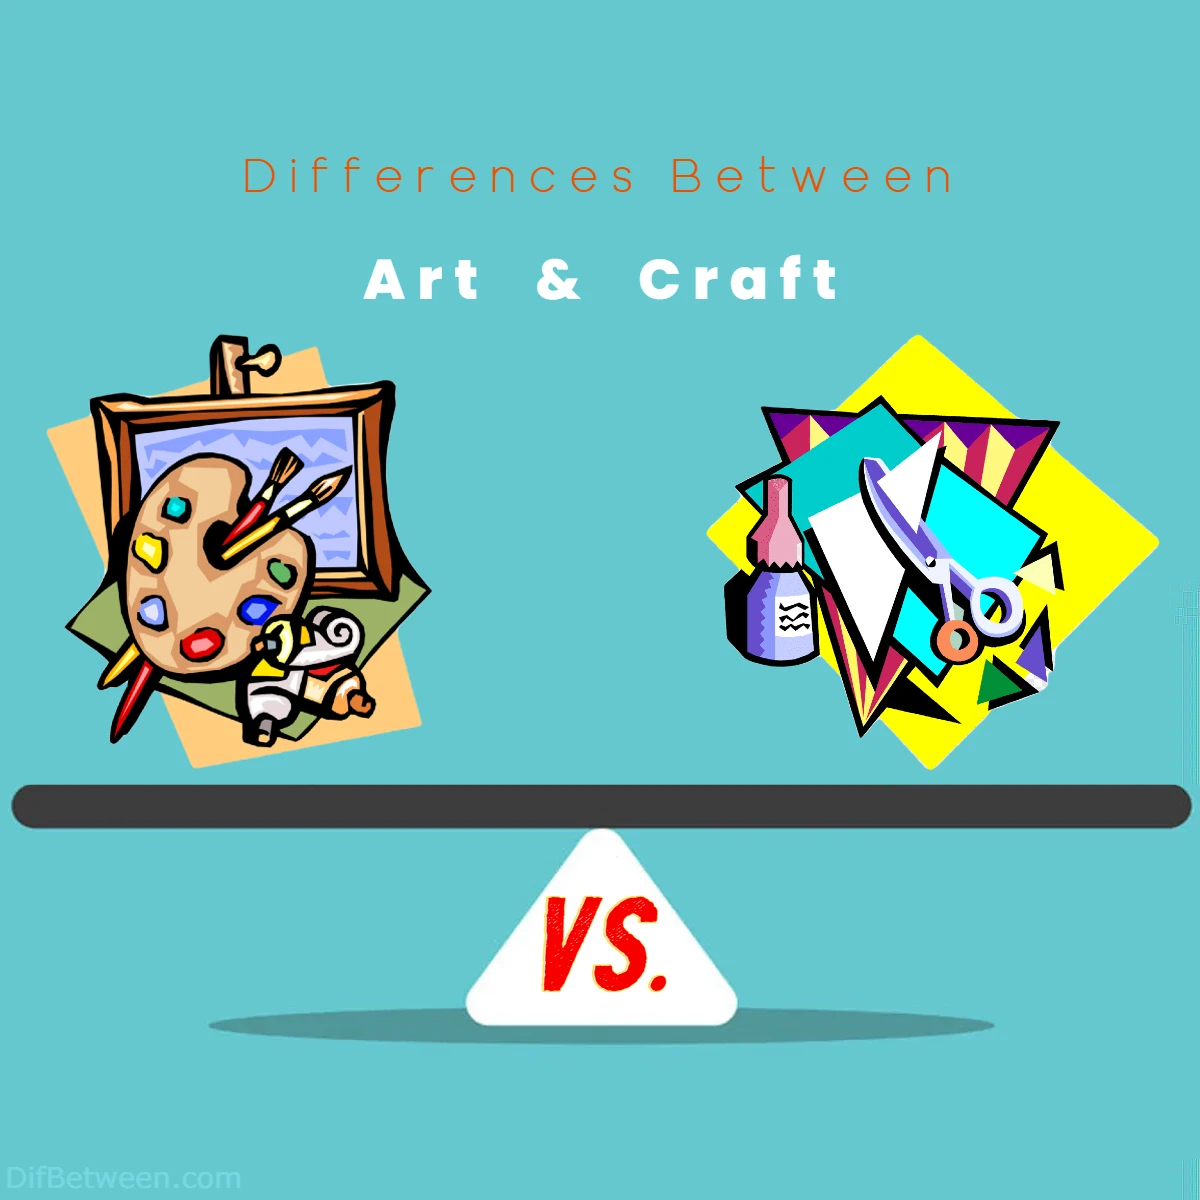 Differences Between Art vs Craft